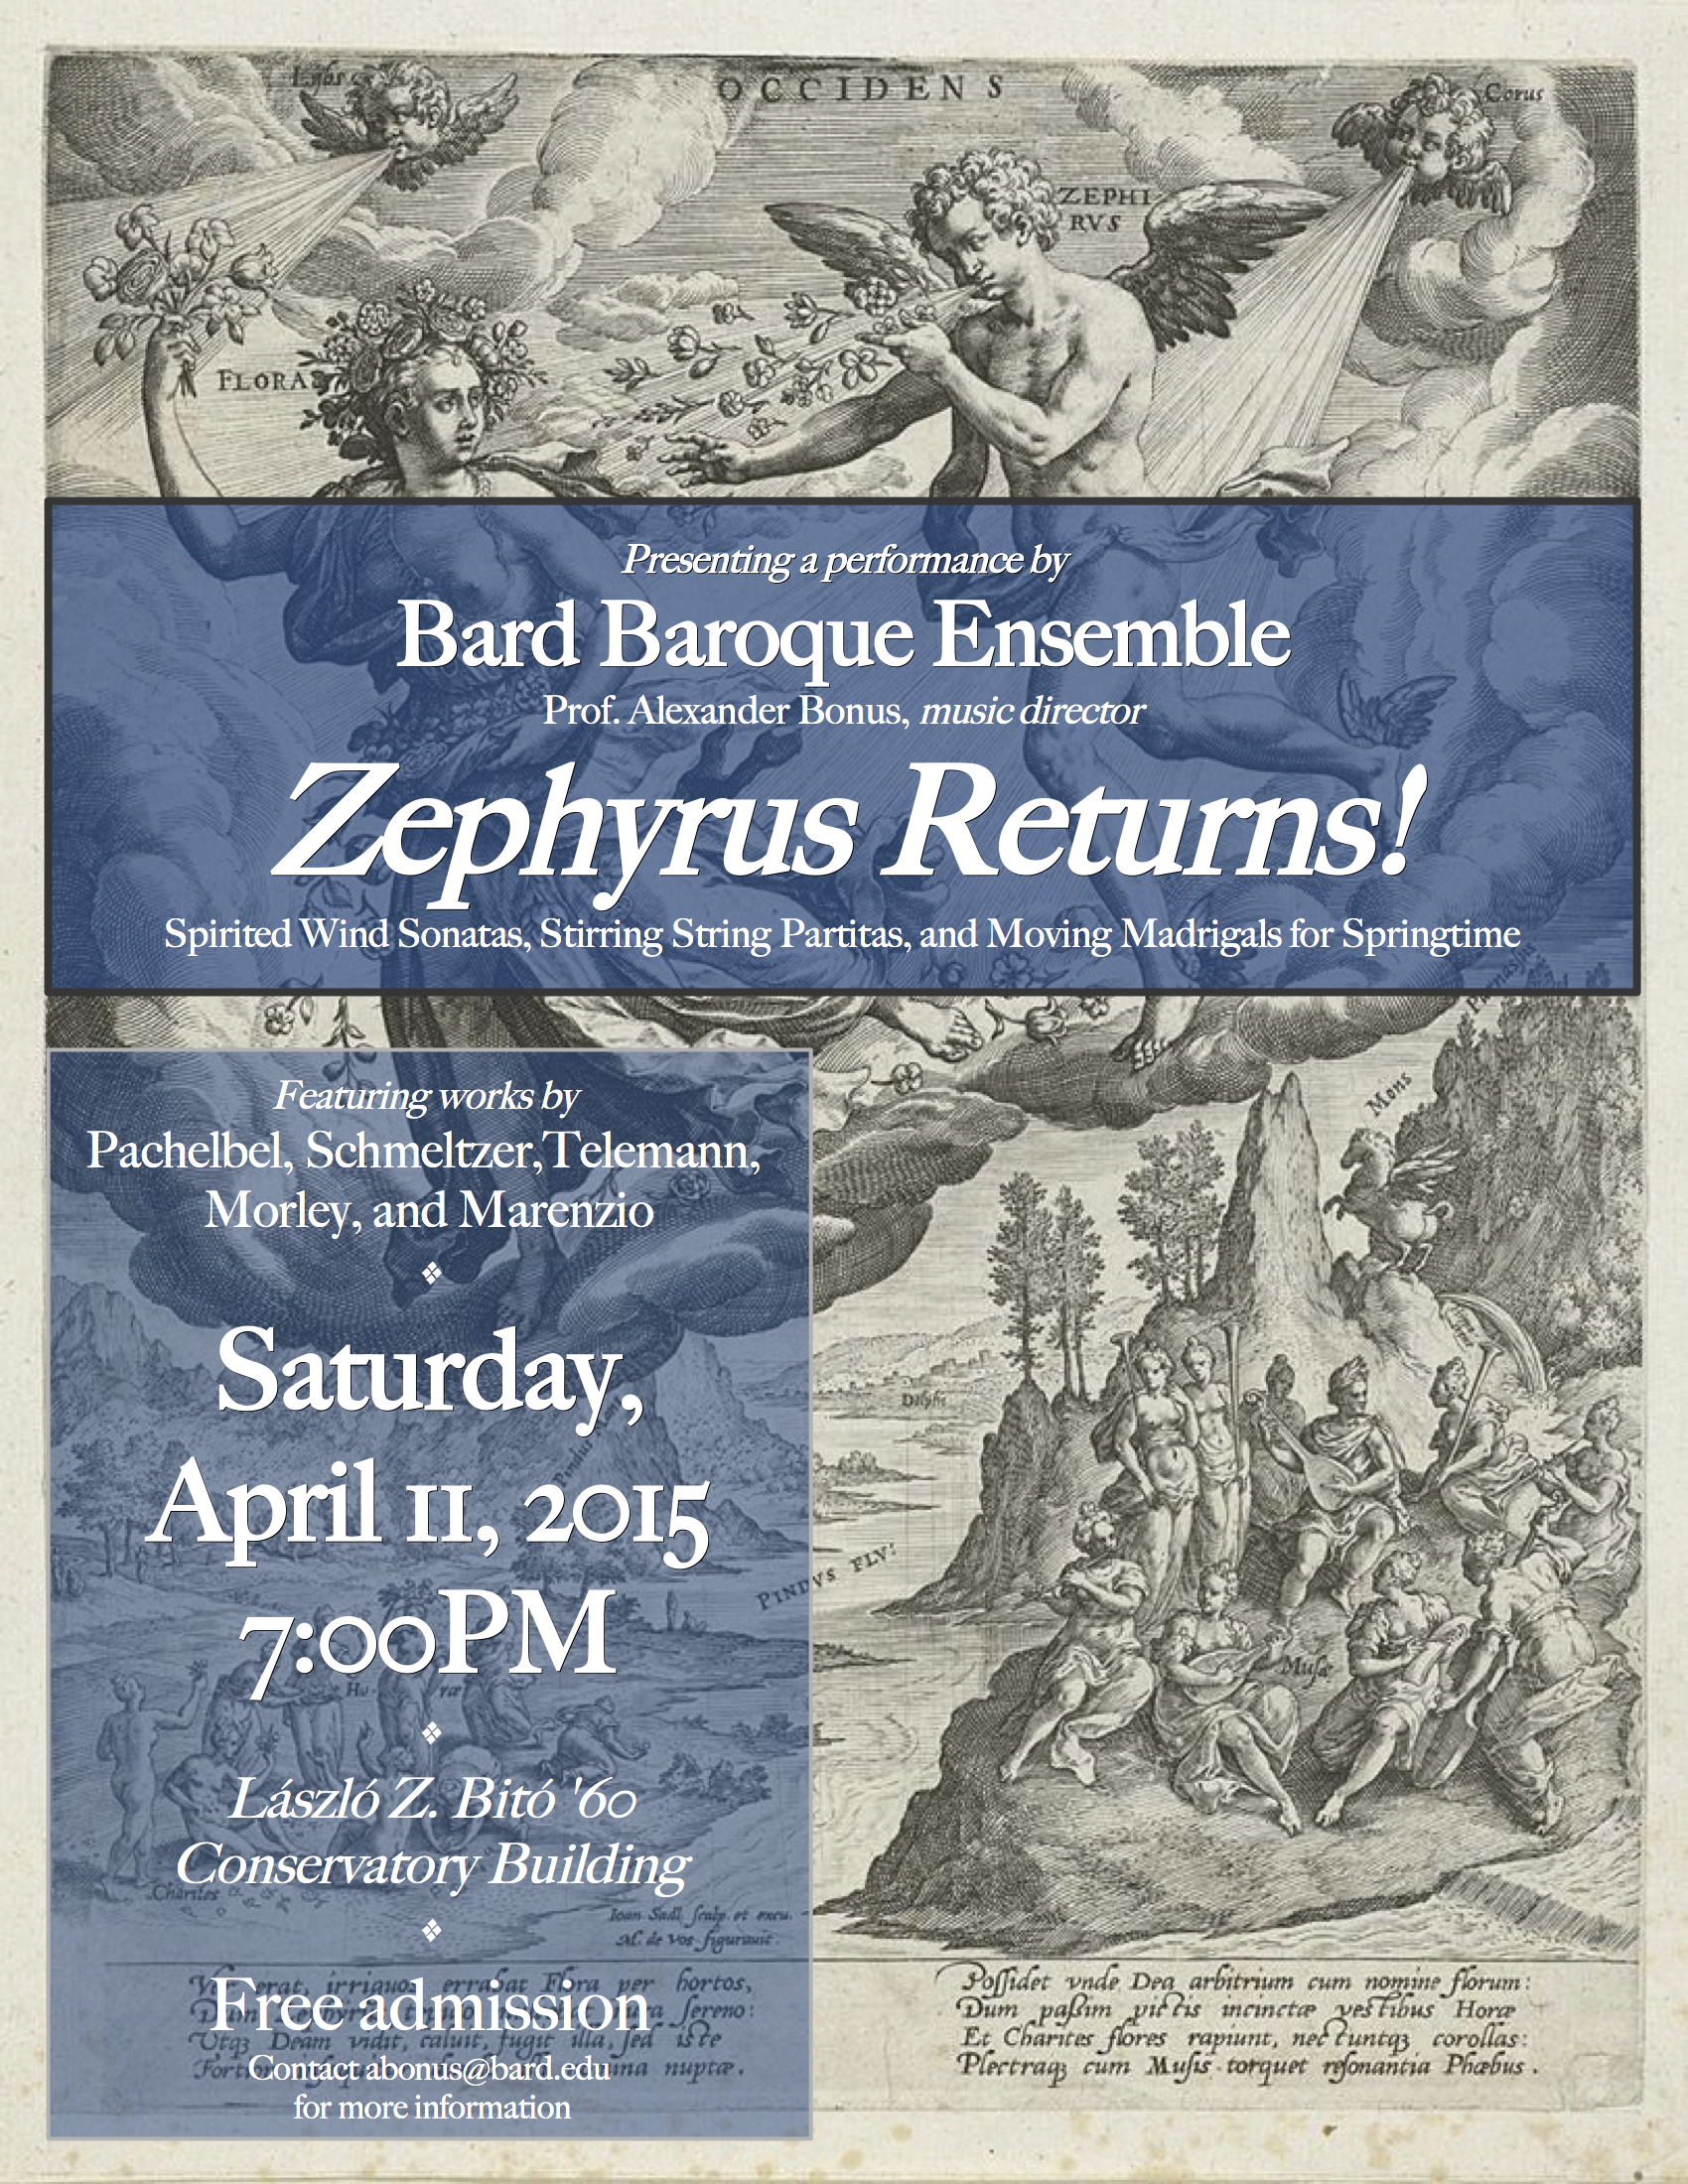 The&nbsp;Bard Baroque Ensemble